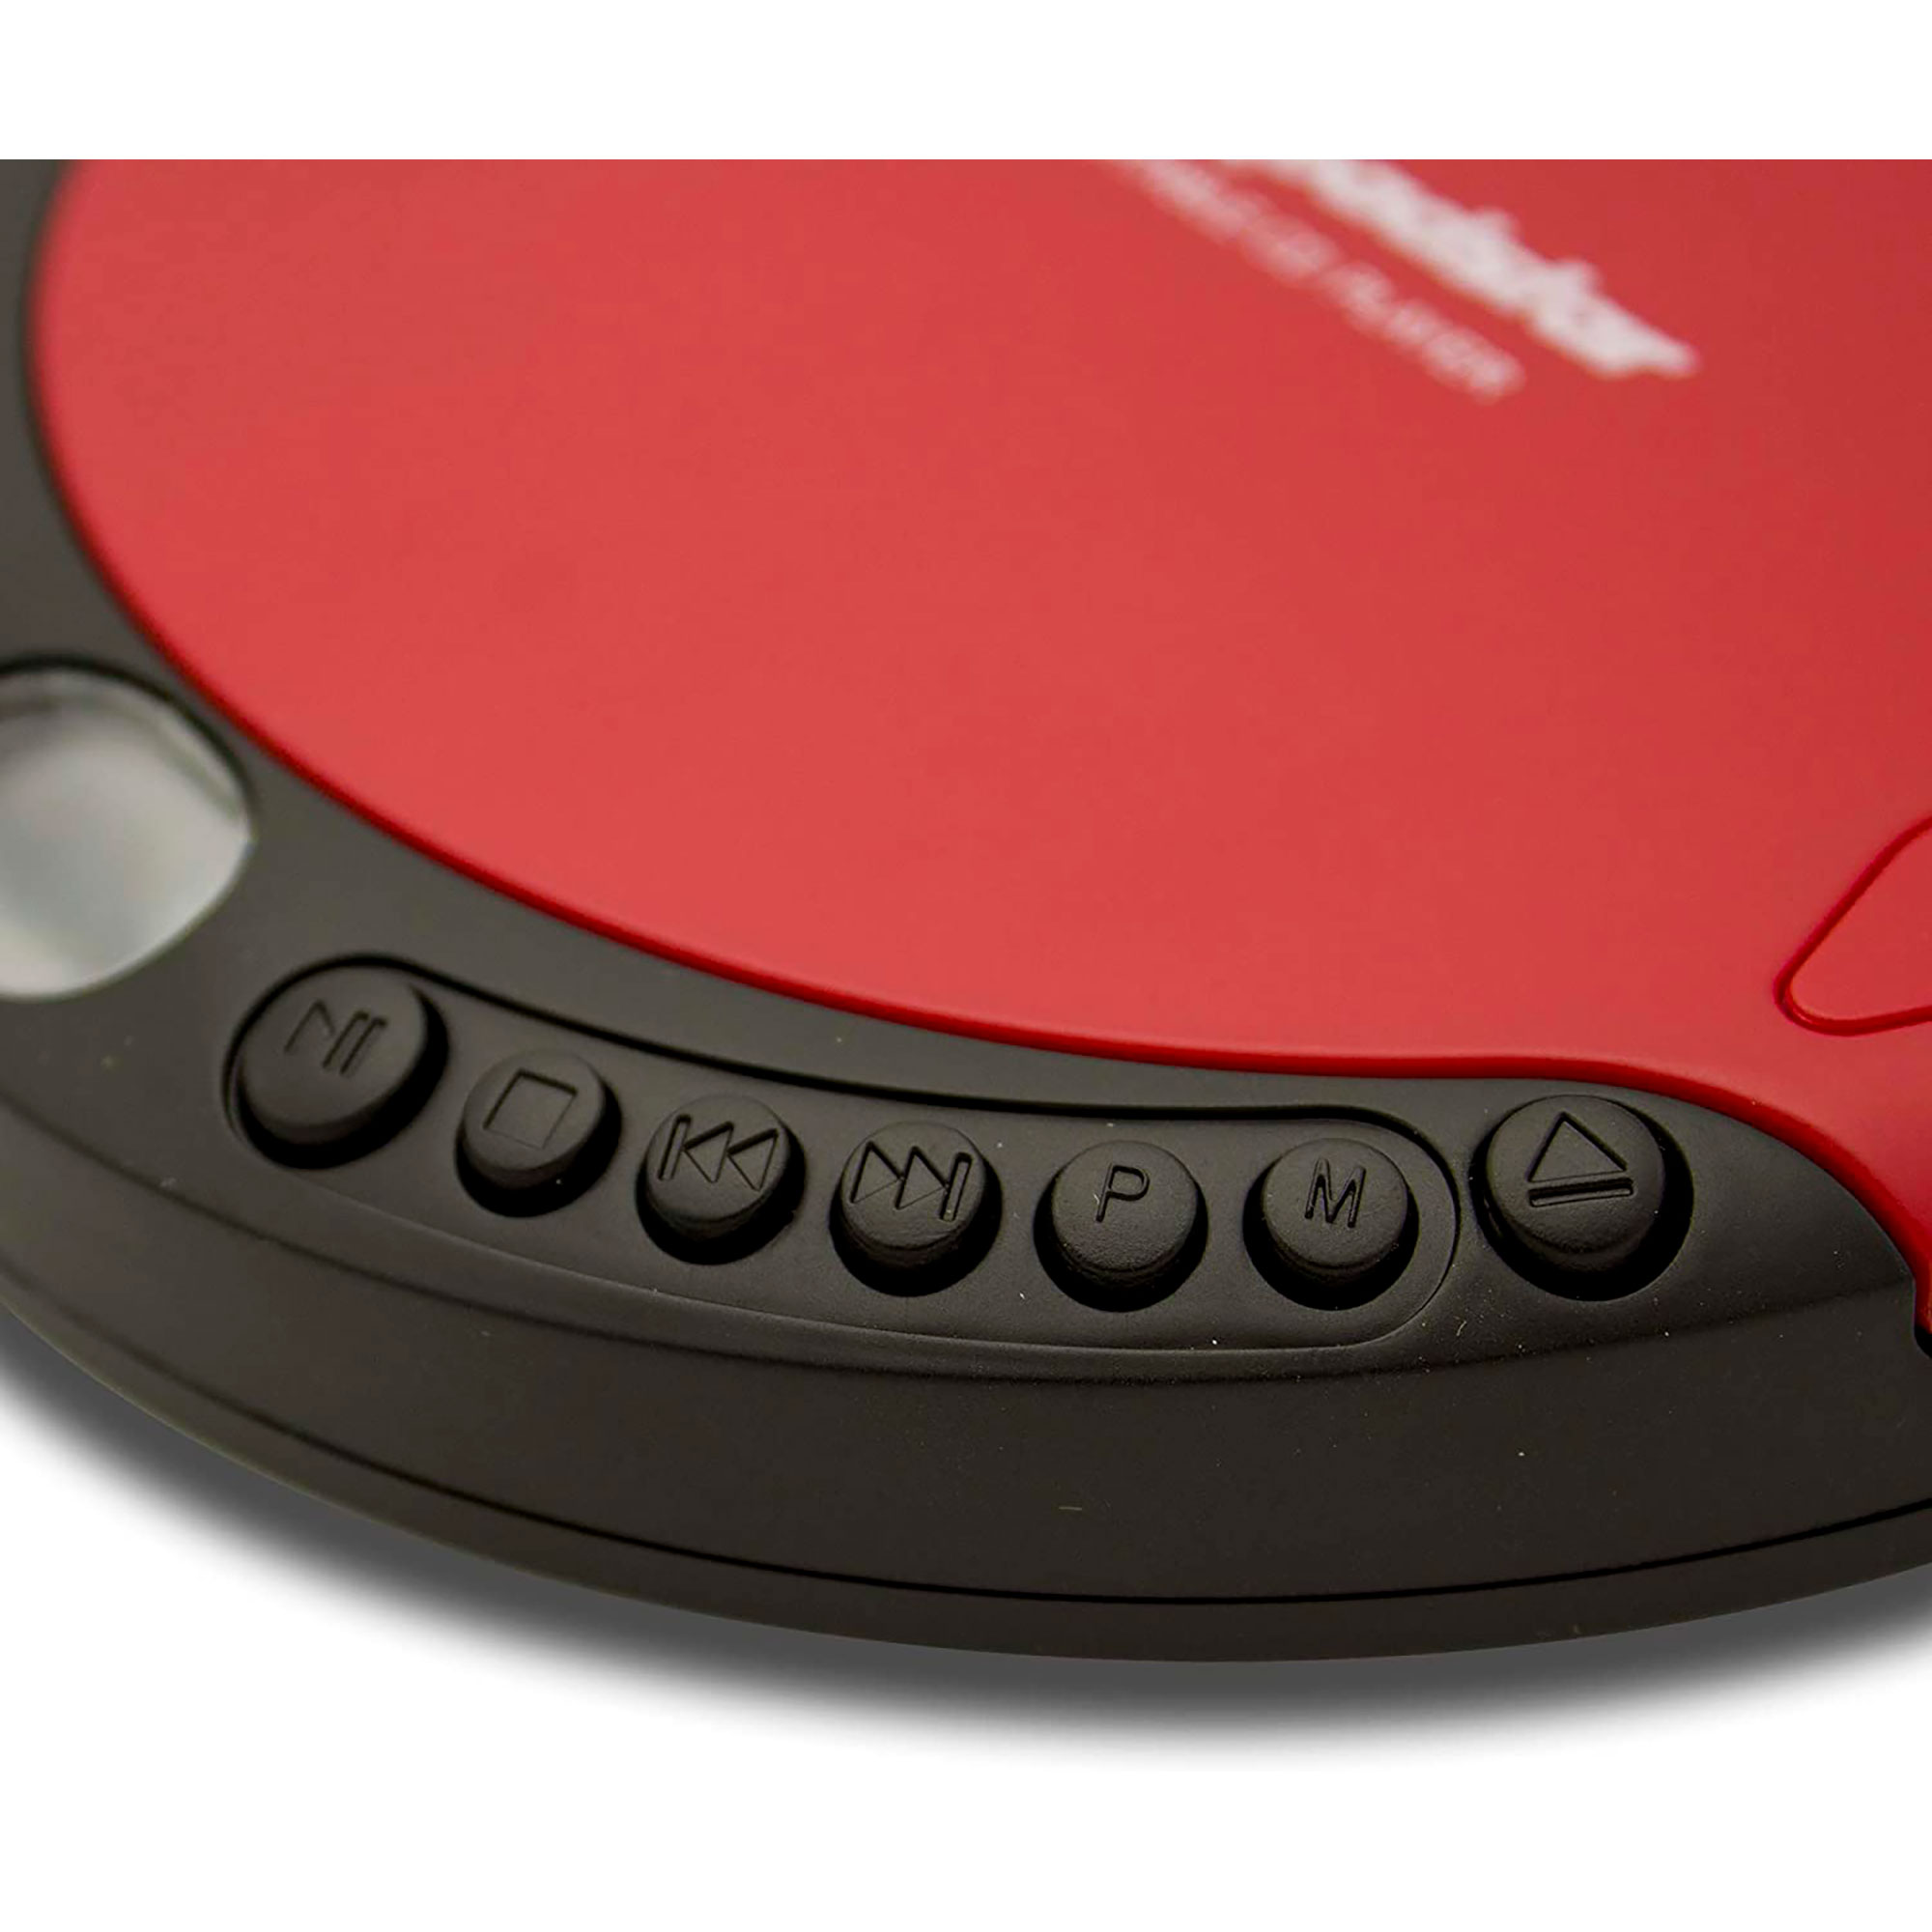 CD Rot PCD435CD Tragbarer ROADSTAR Player,